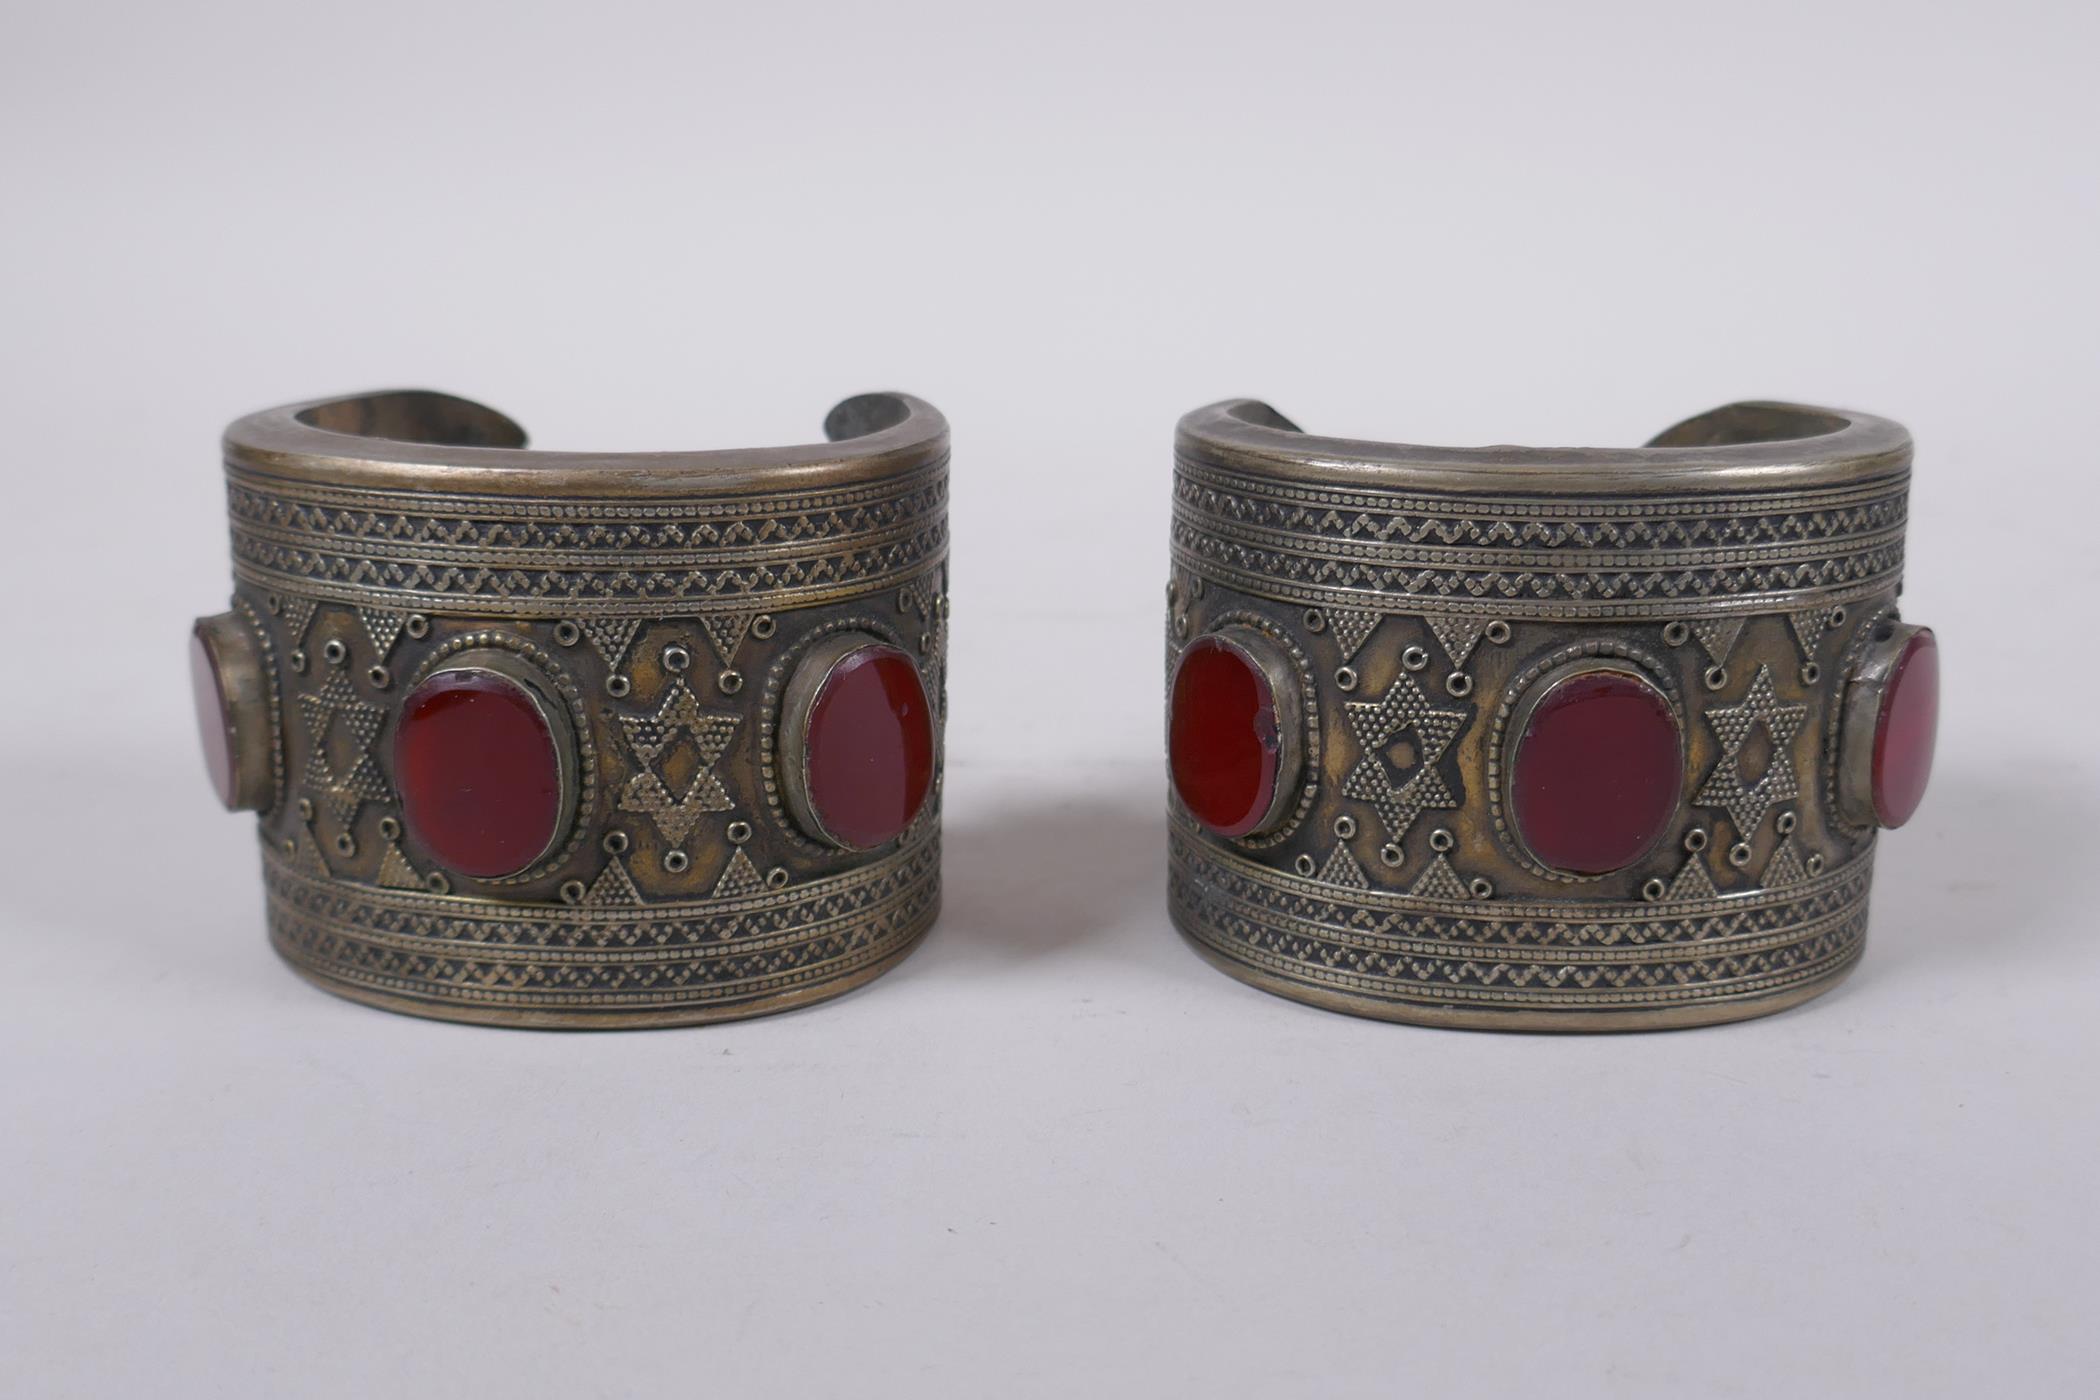 A pair of Turkmen white metal bangles set with red semi precious stones, 8 x 6cm